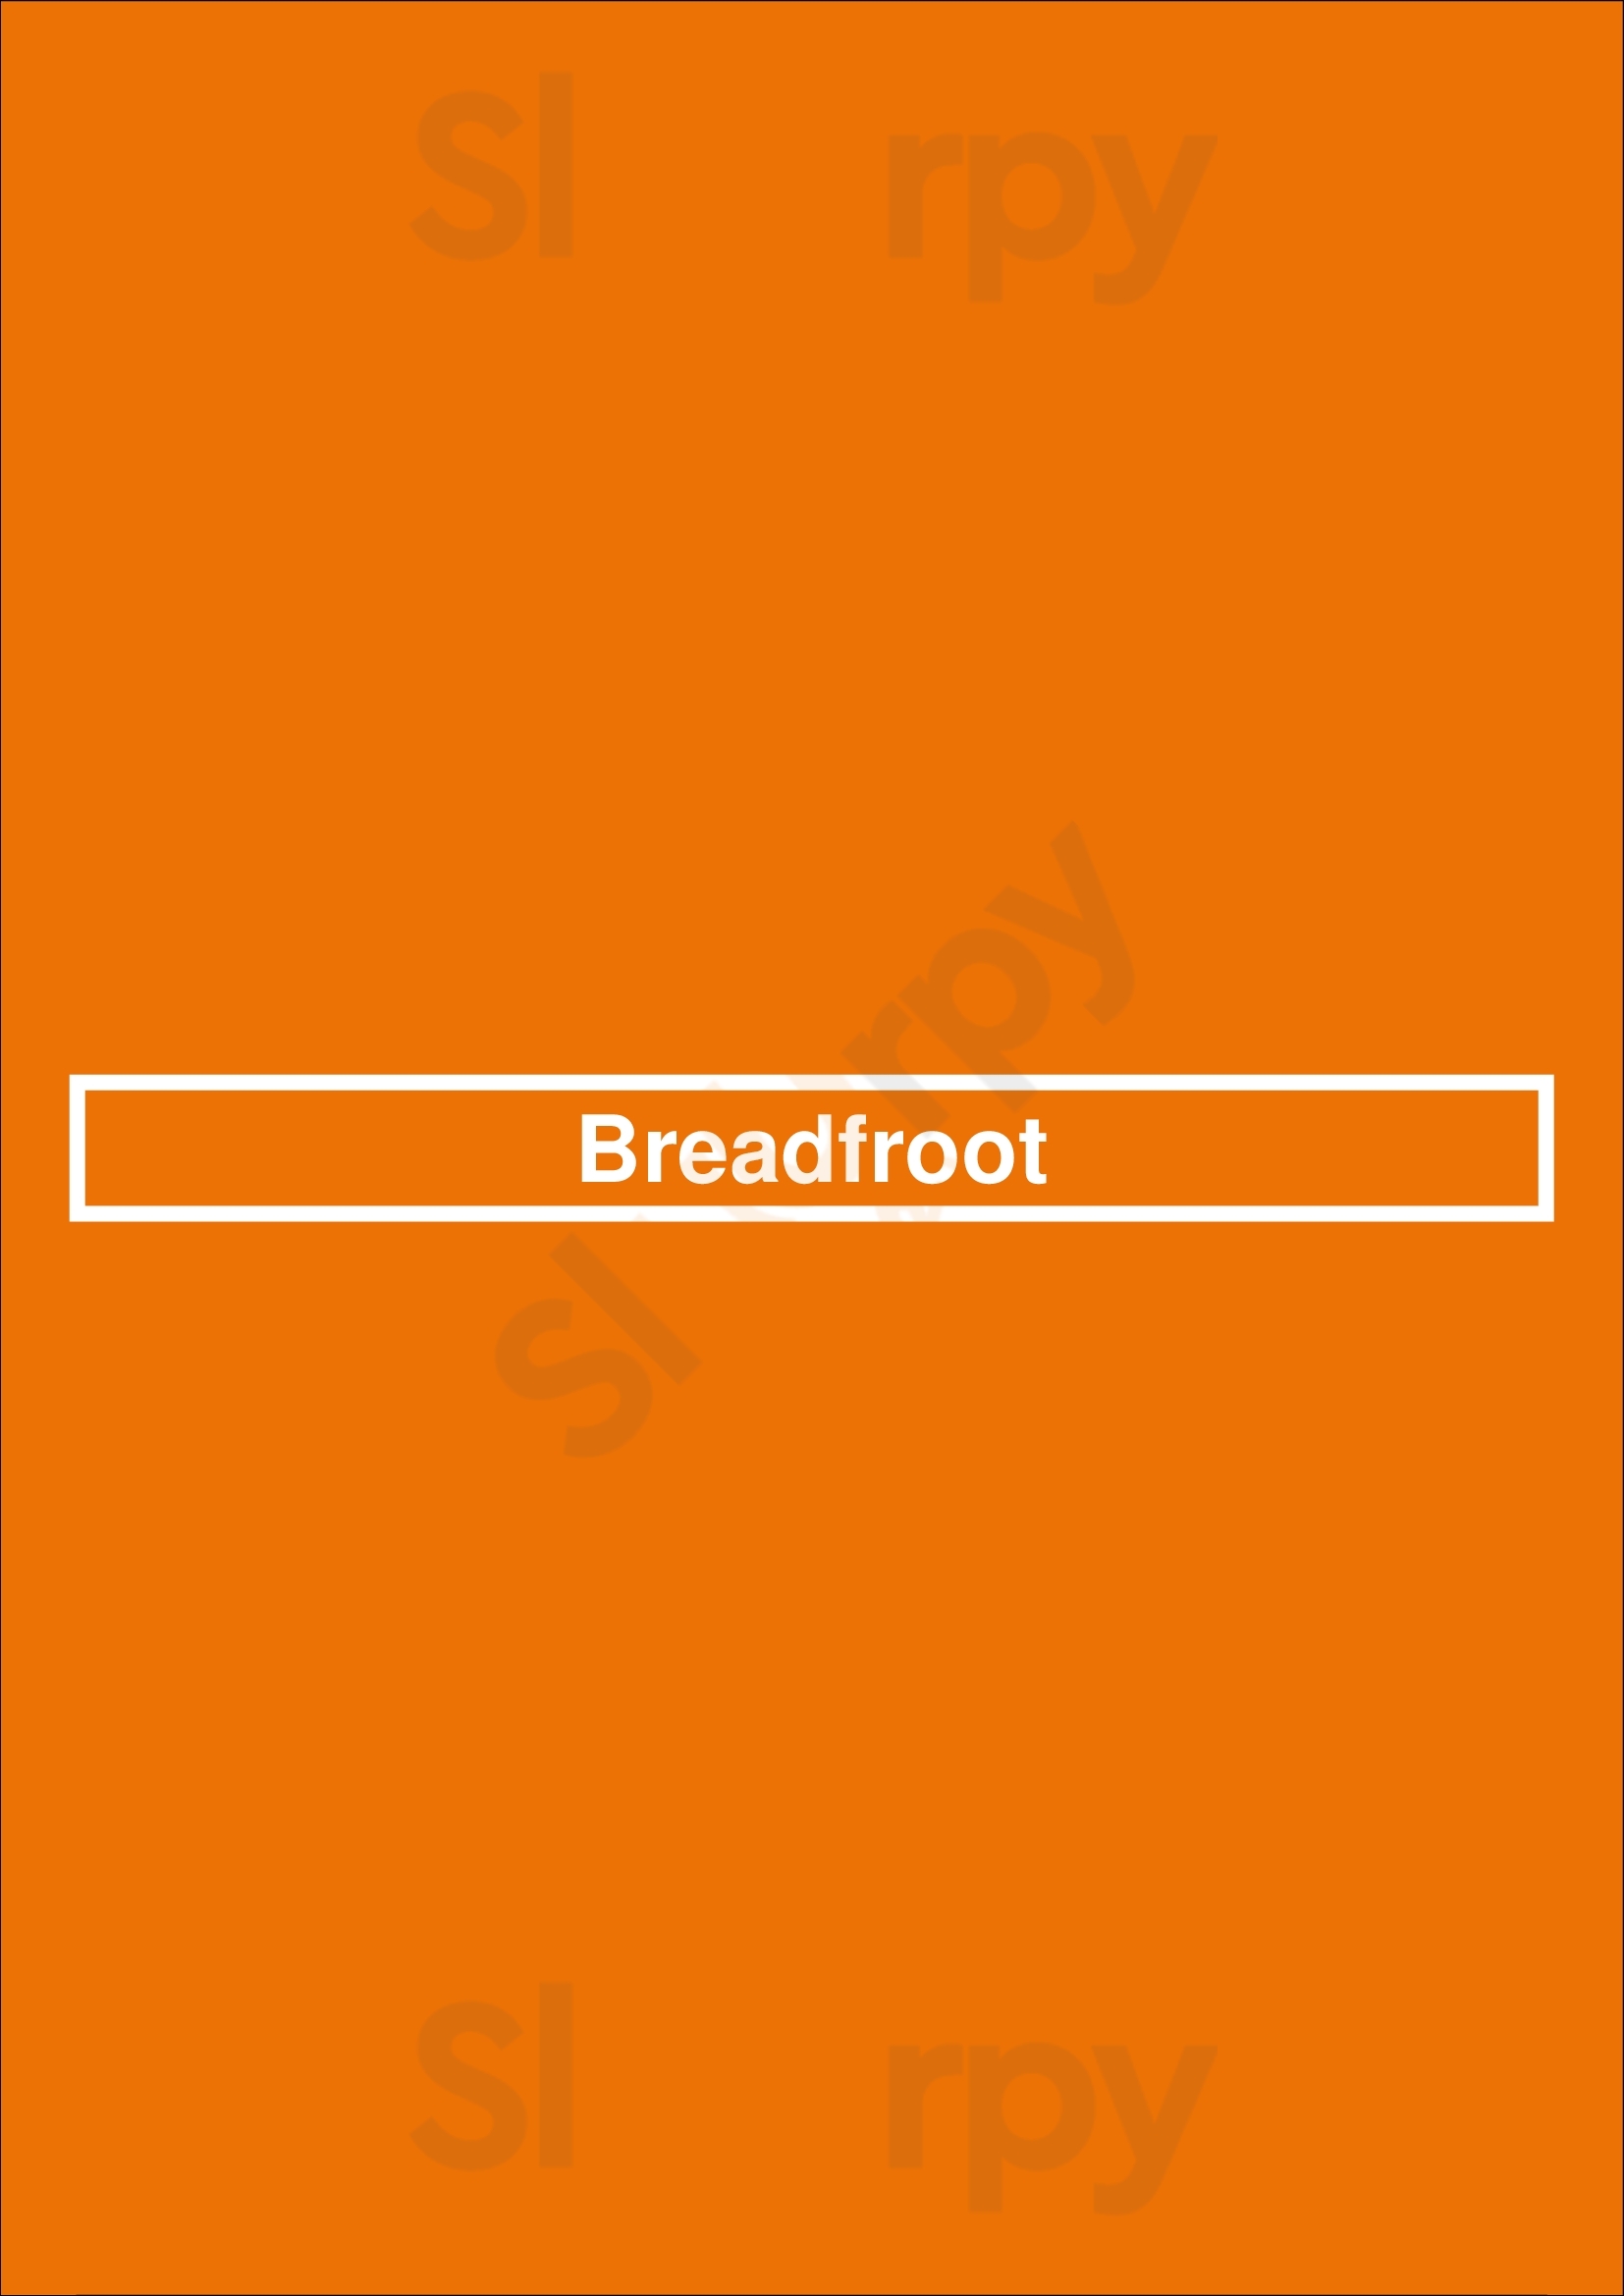 Breadfroot New York City Menu - 1